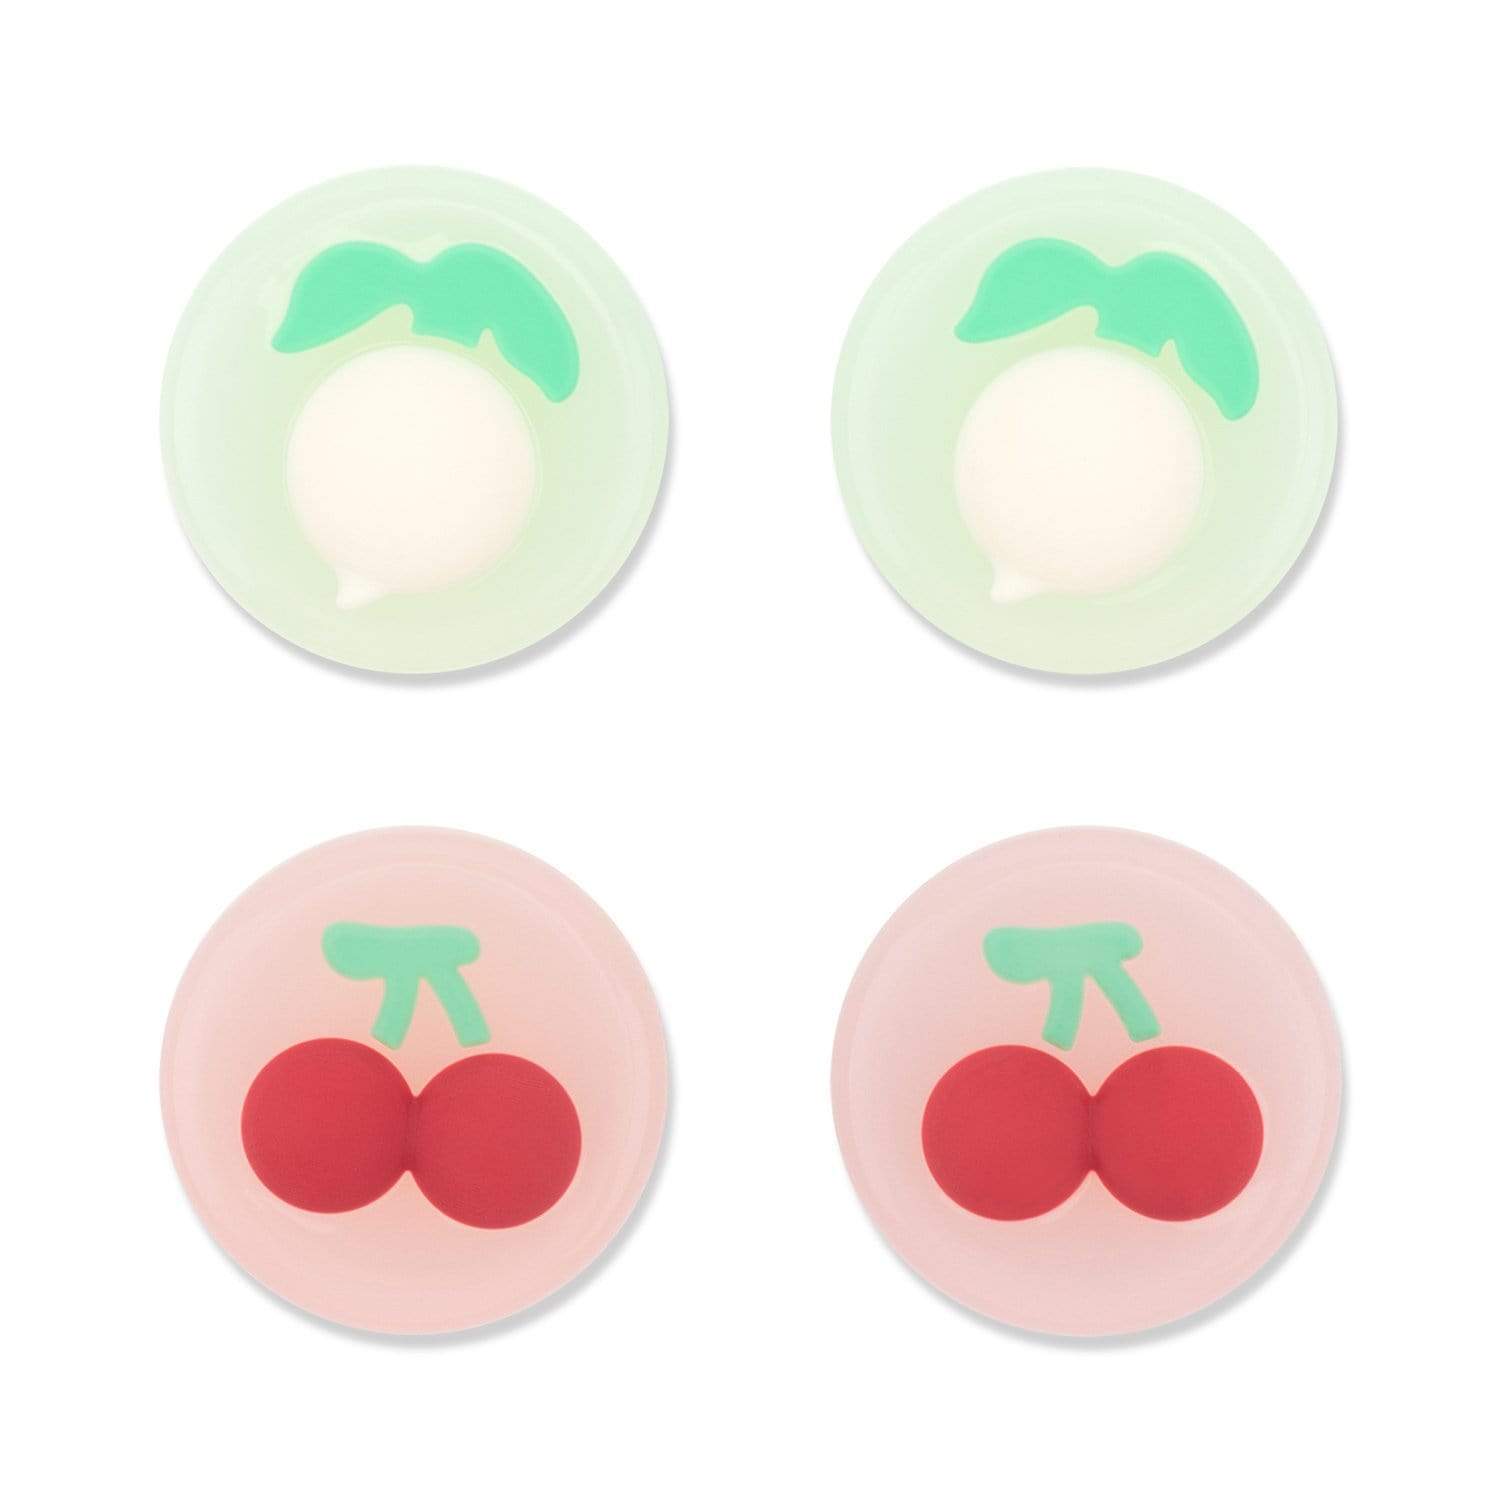 Cherry and Turnip - Nintendo Switch Joy-Con Thumbcap Grips